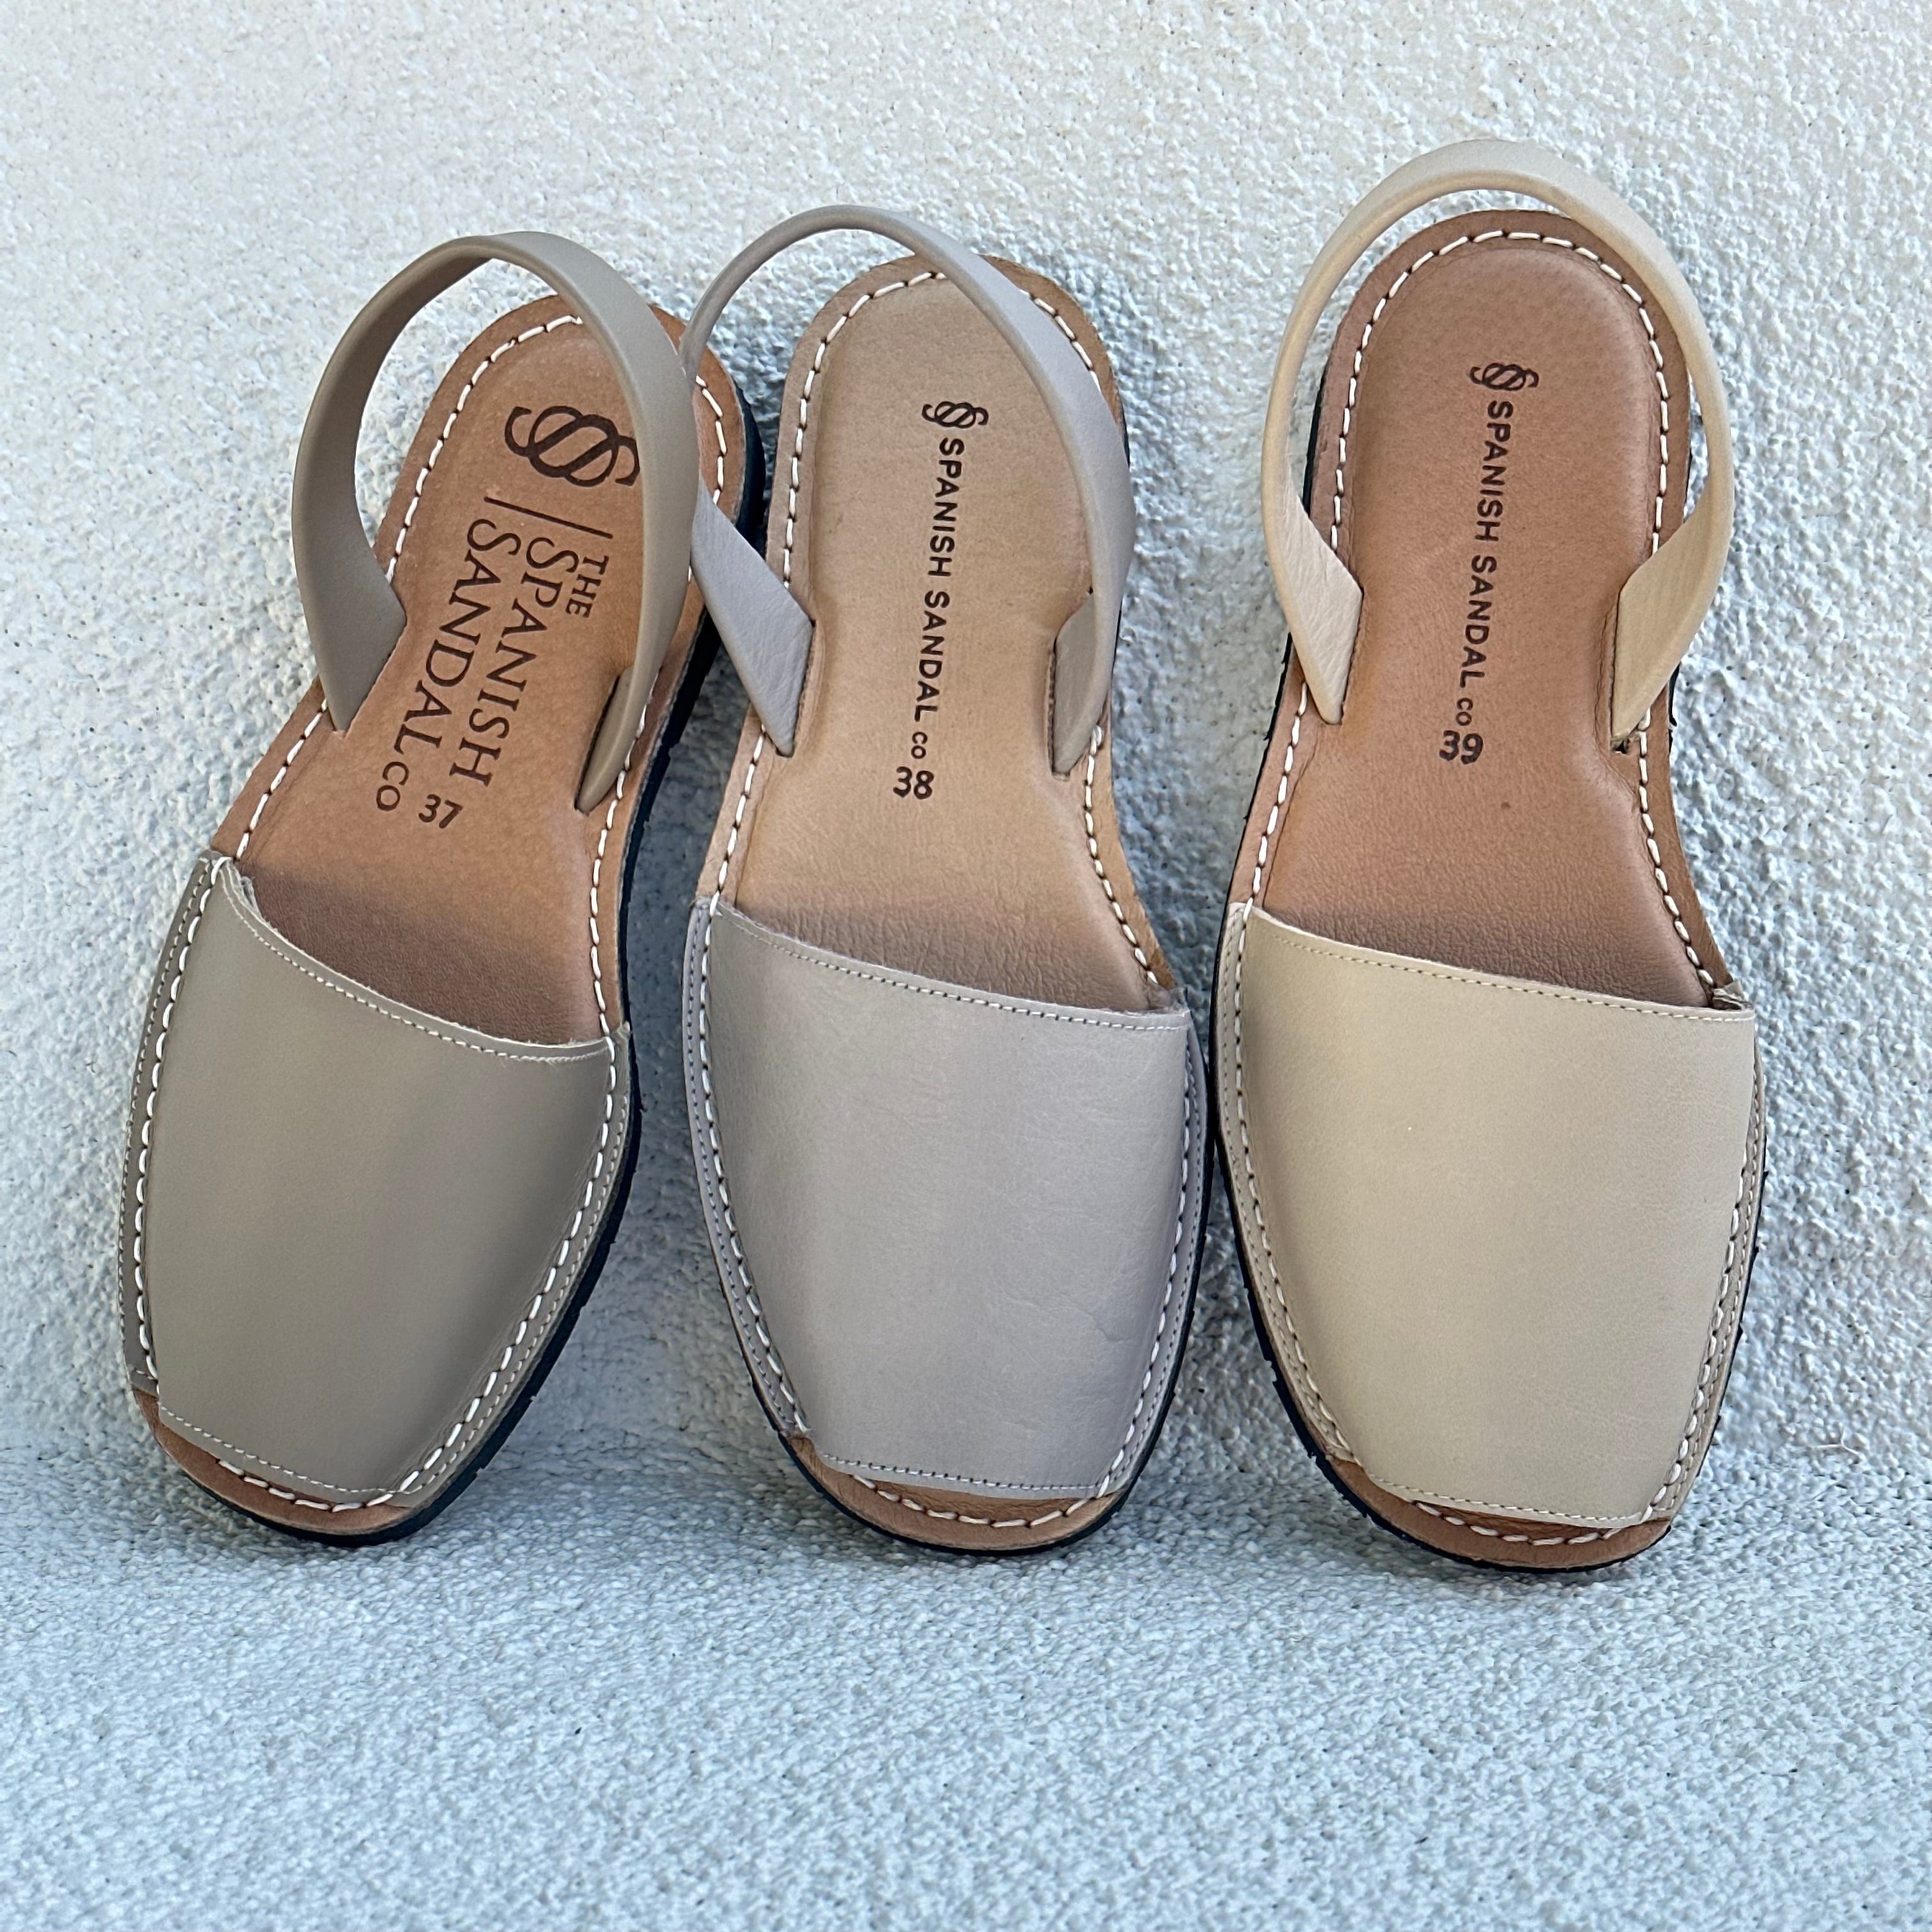 Classic soft grey sandals - The Spanish Sandal Company